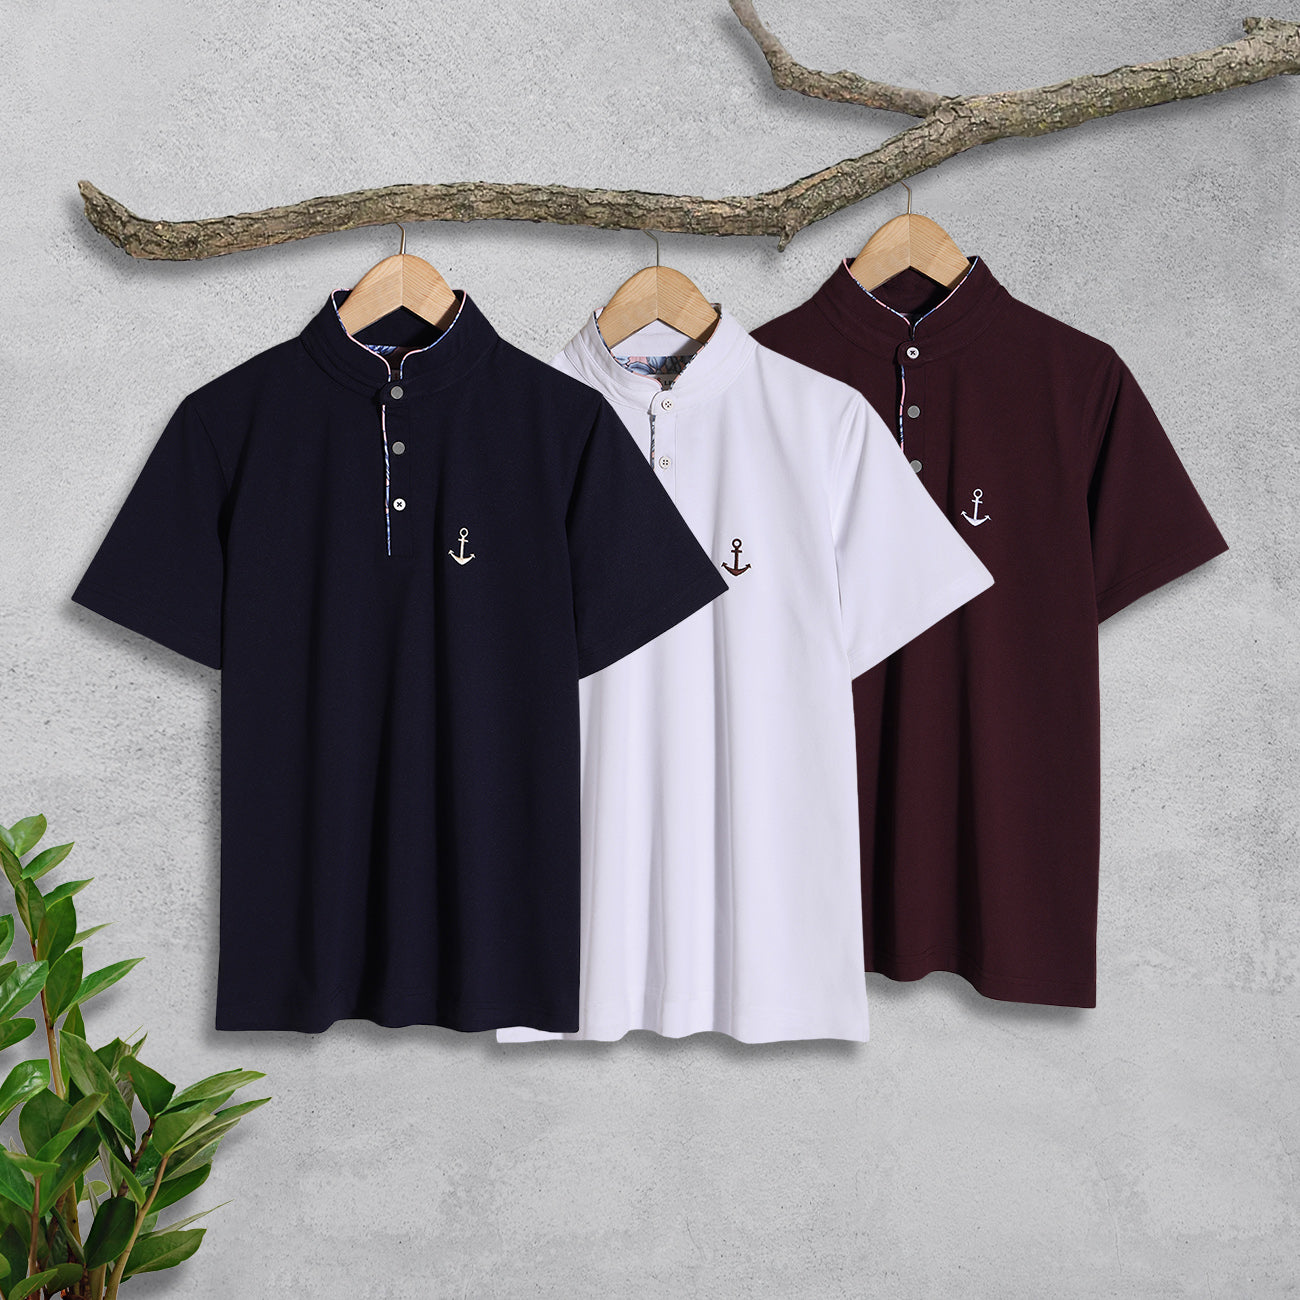 Combo Pack of 3 Mandarin Collar Premium T-shirt